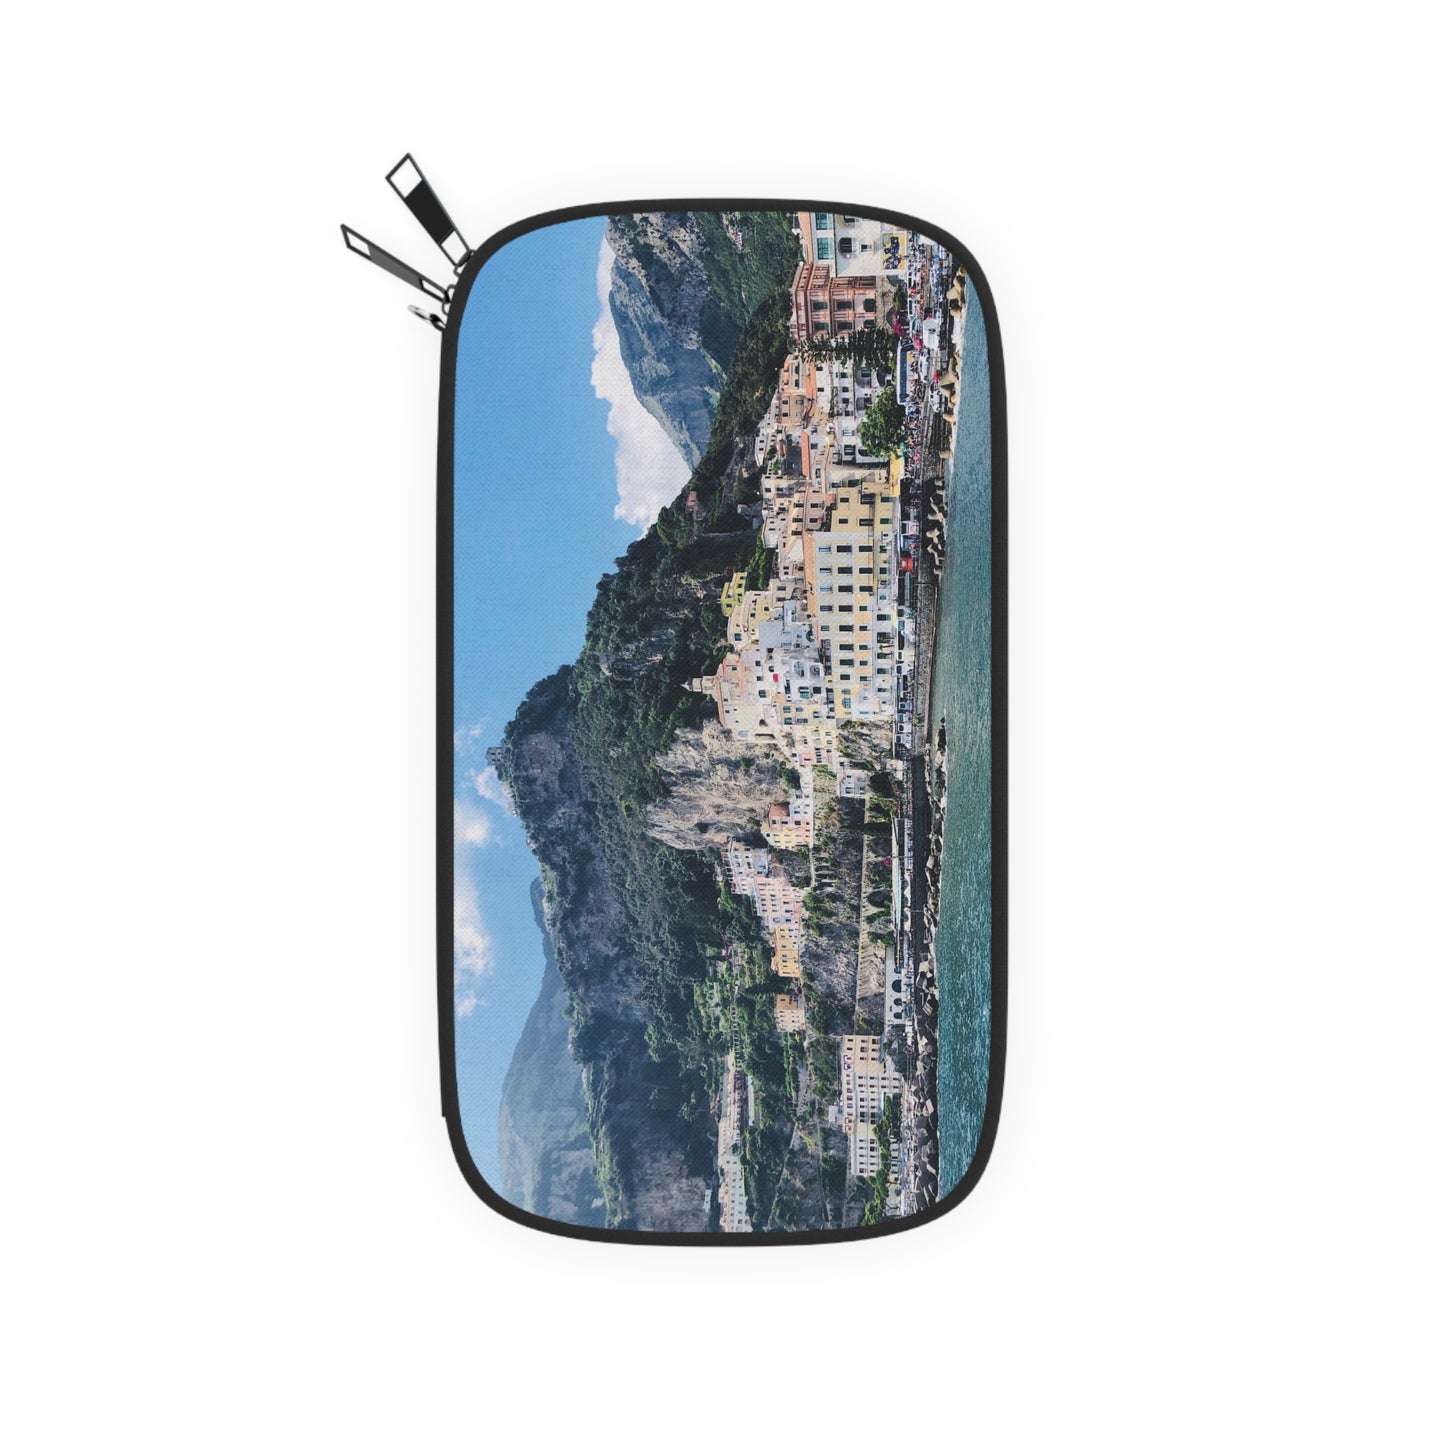 "Amalfi" (Passport Wallet)